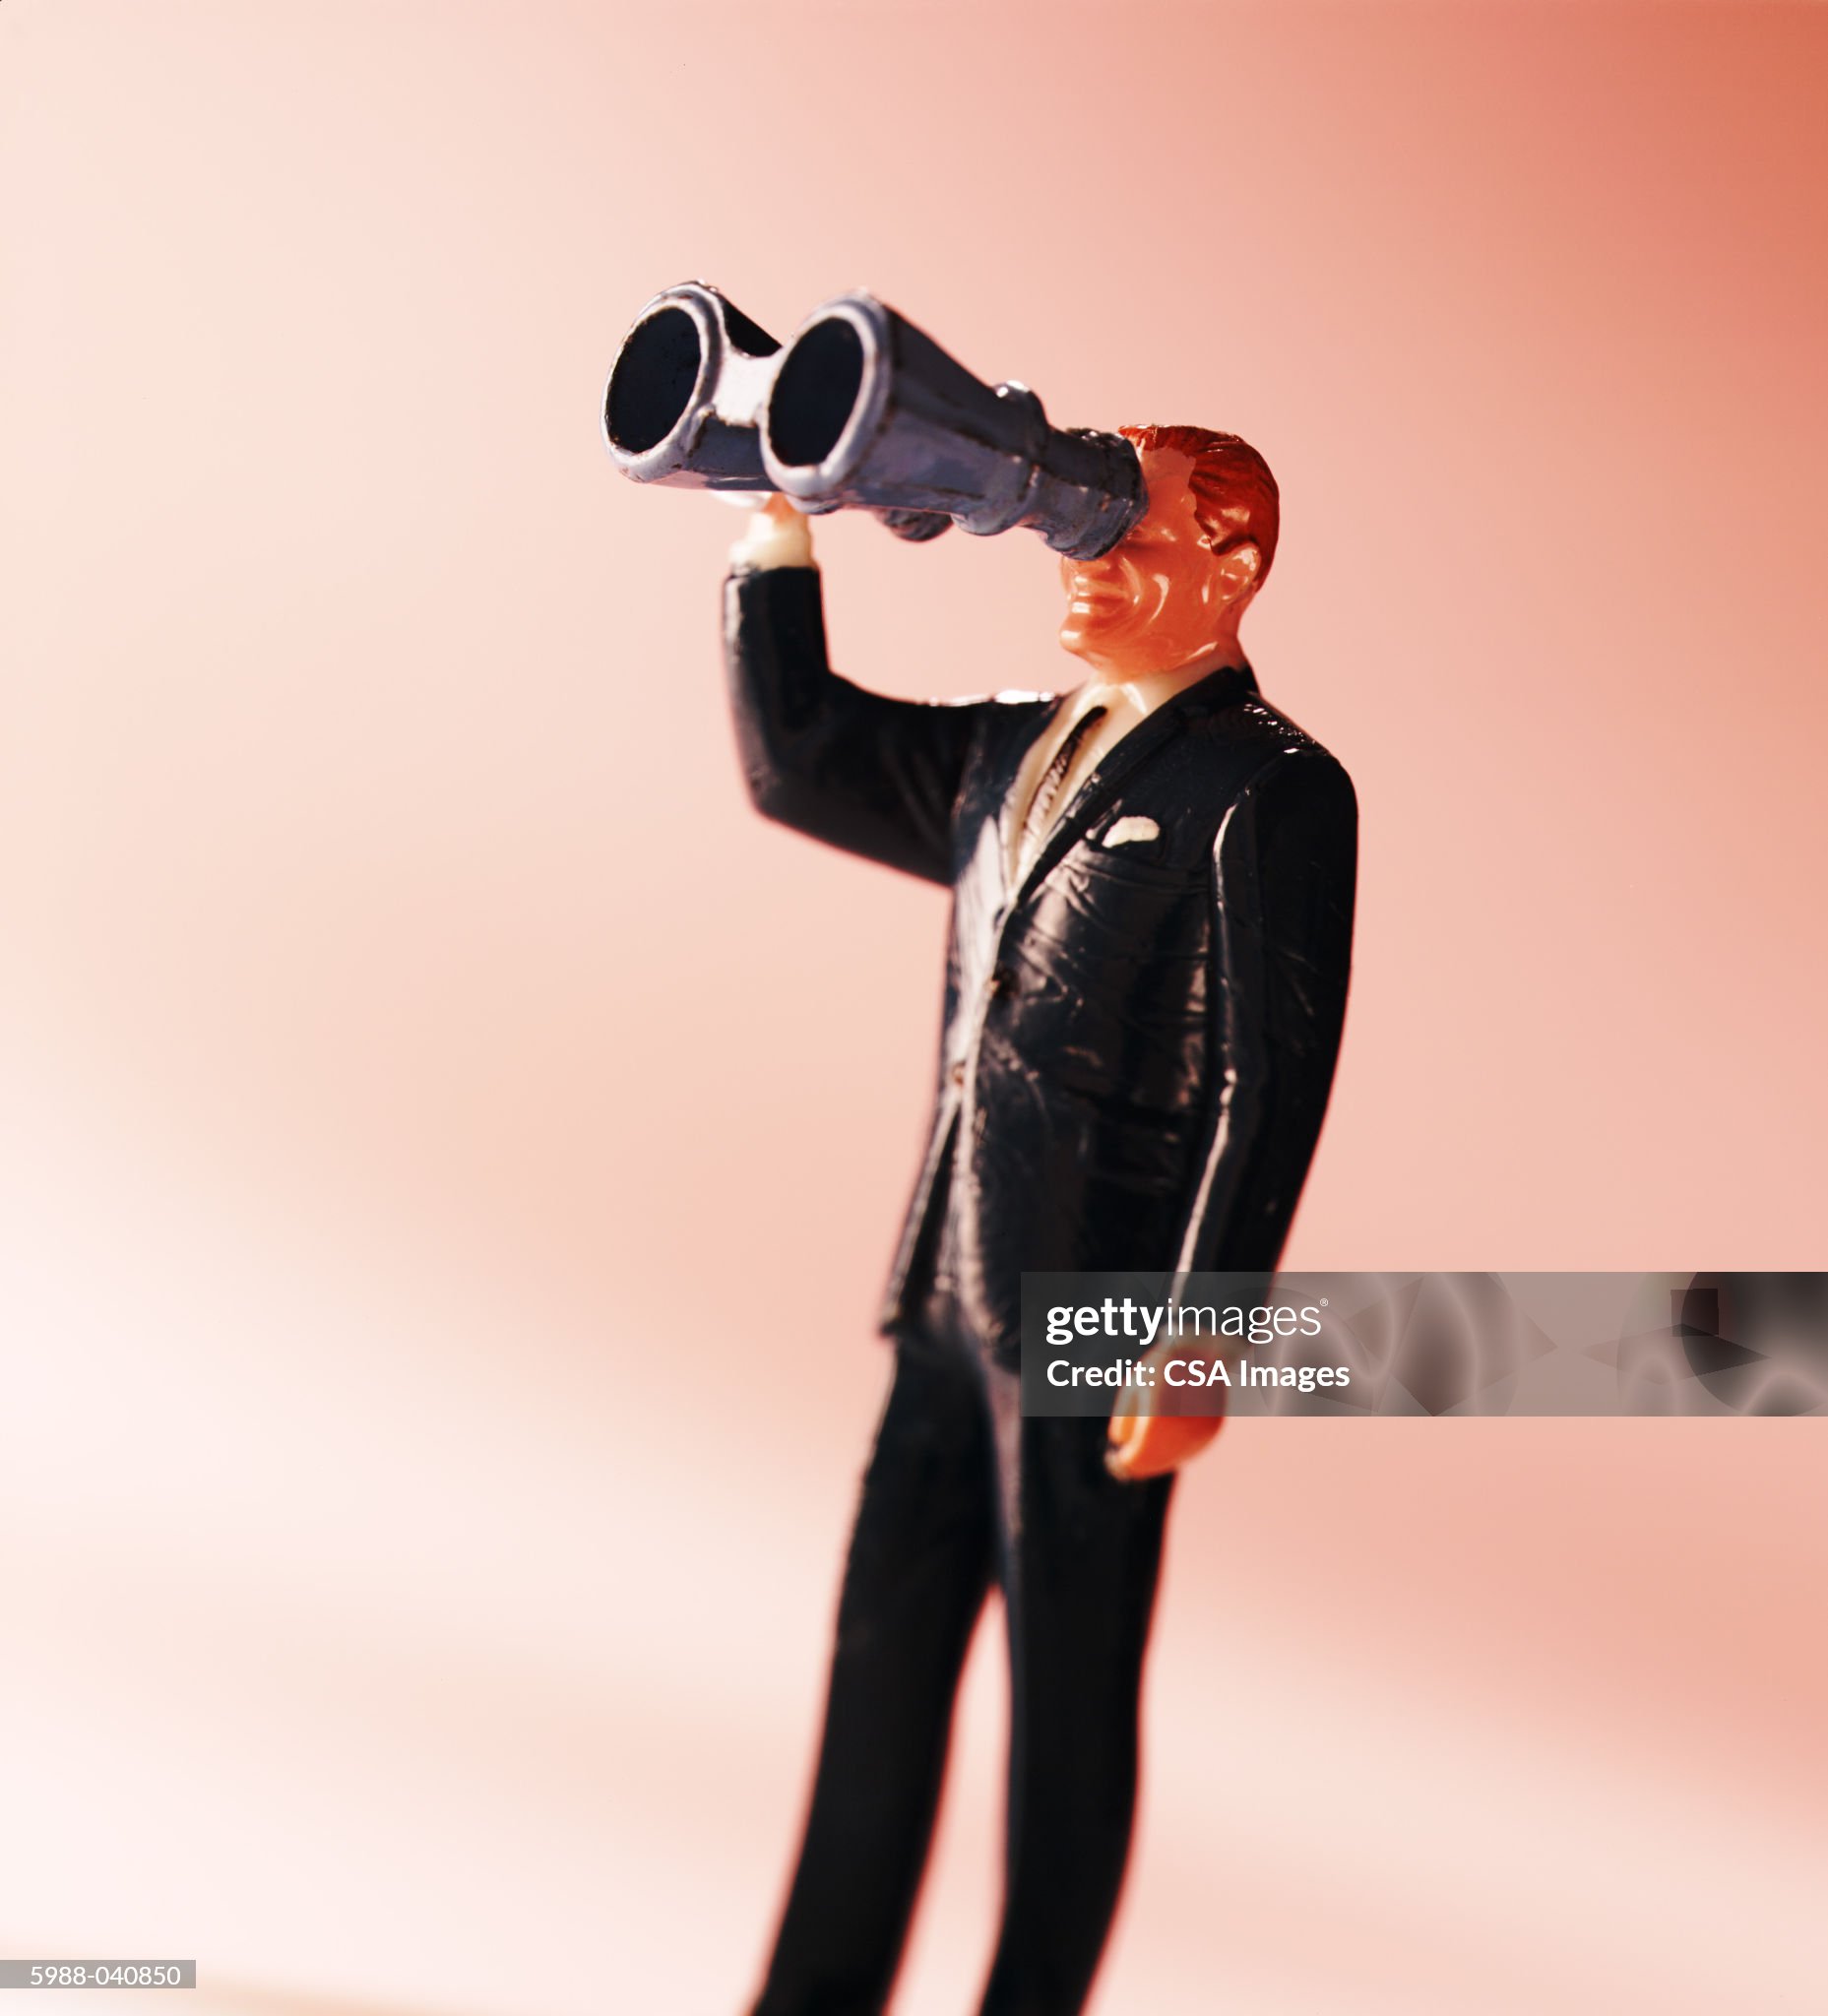 businessman-using-binoculars.jpg